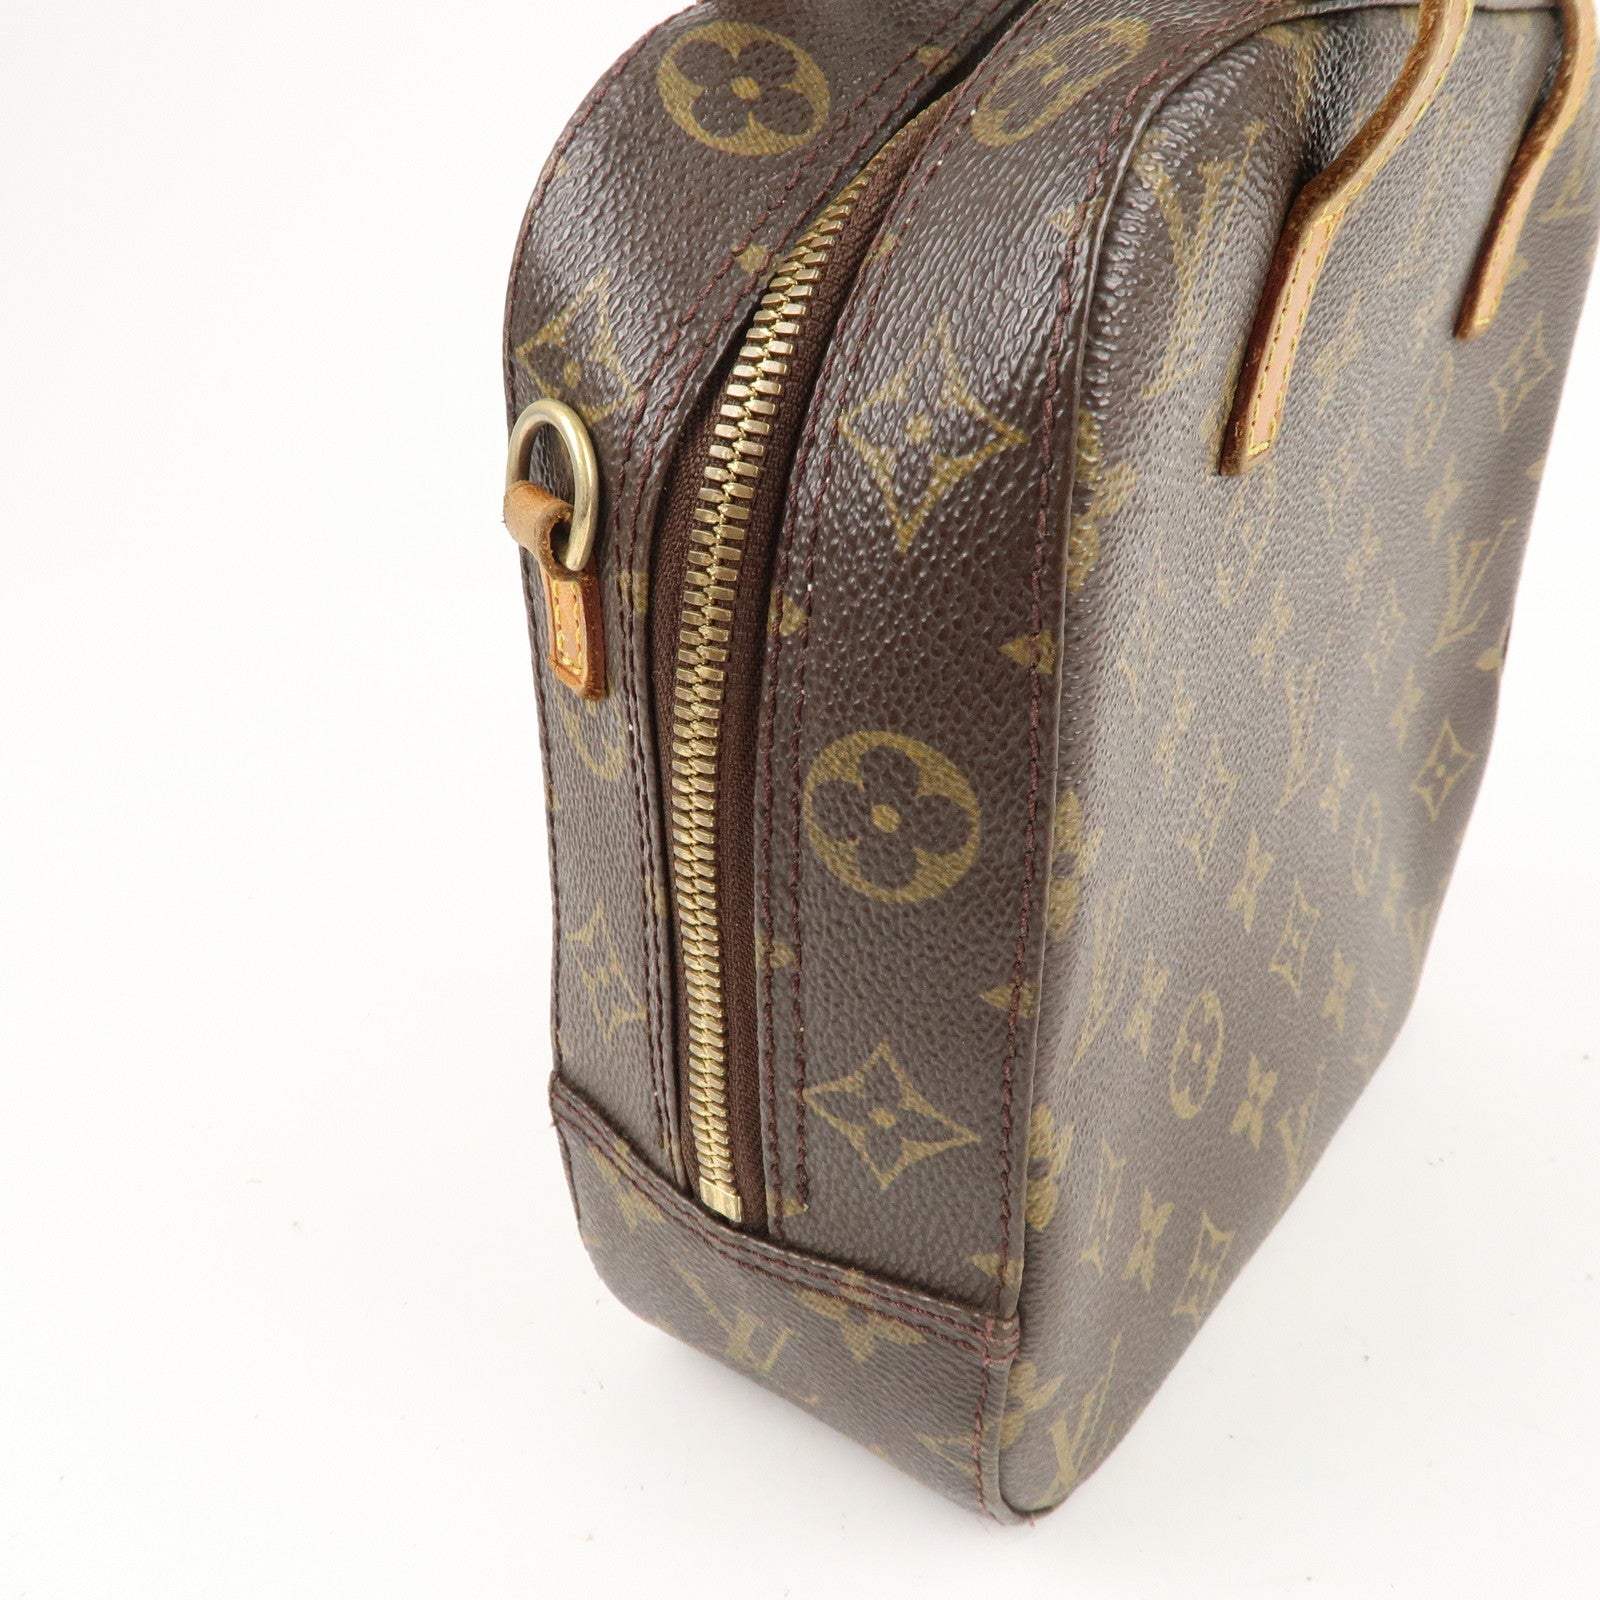 Louis Vuitton Brown Monogram Canvas and Leather Spontini Shoulder Bag